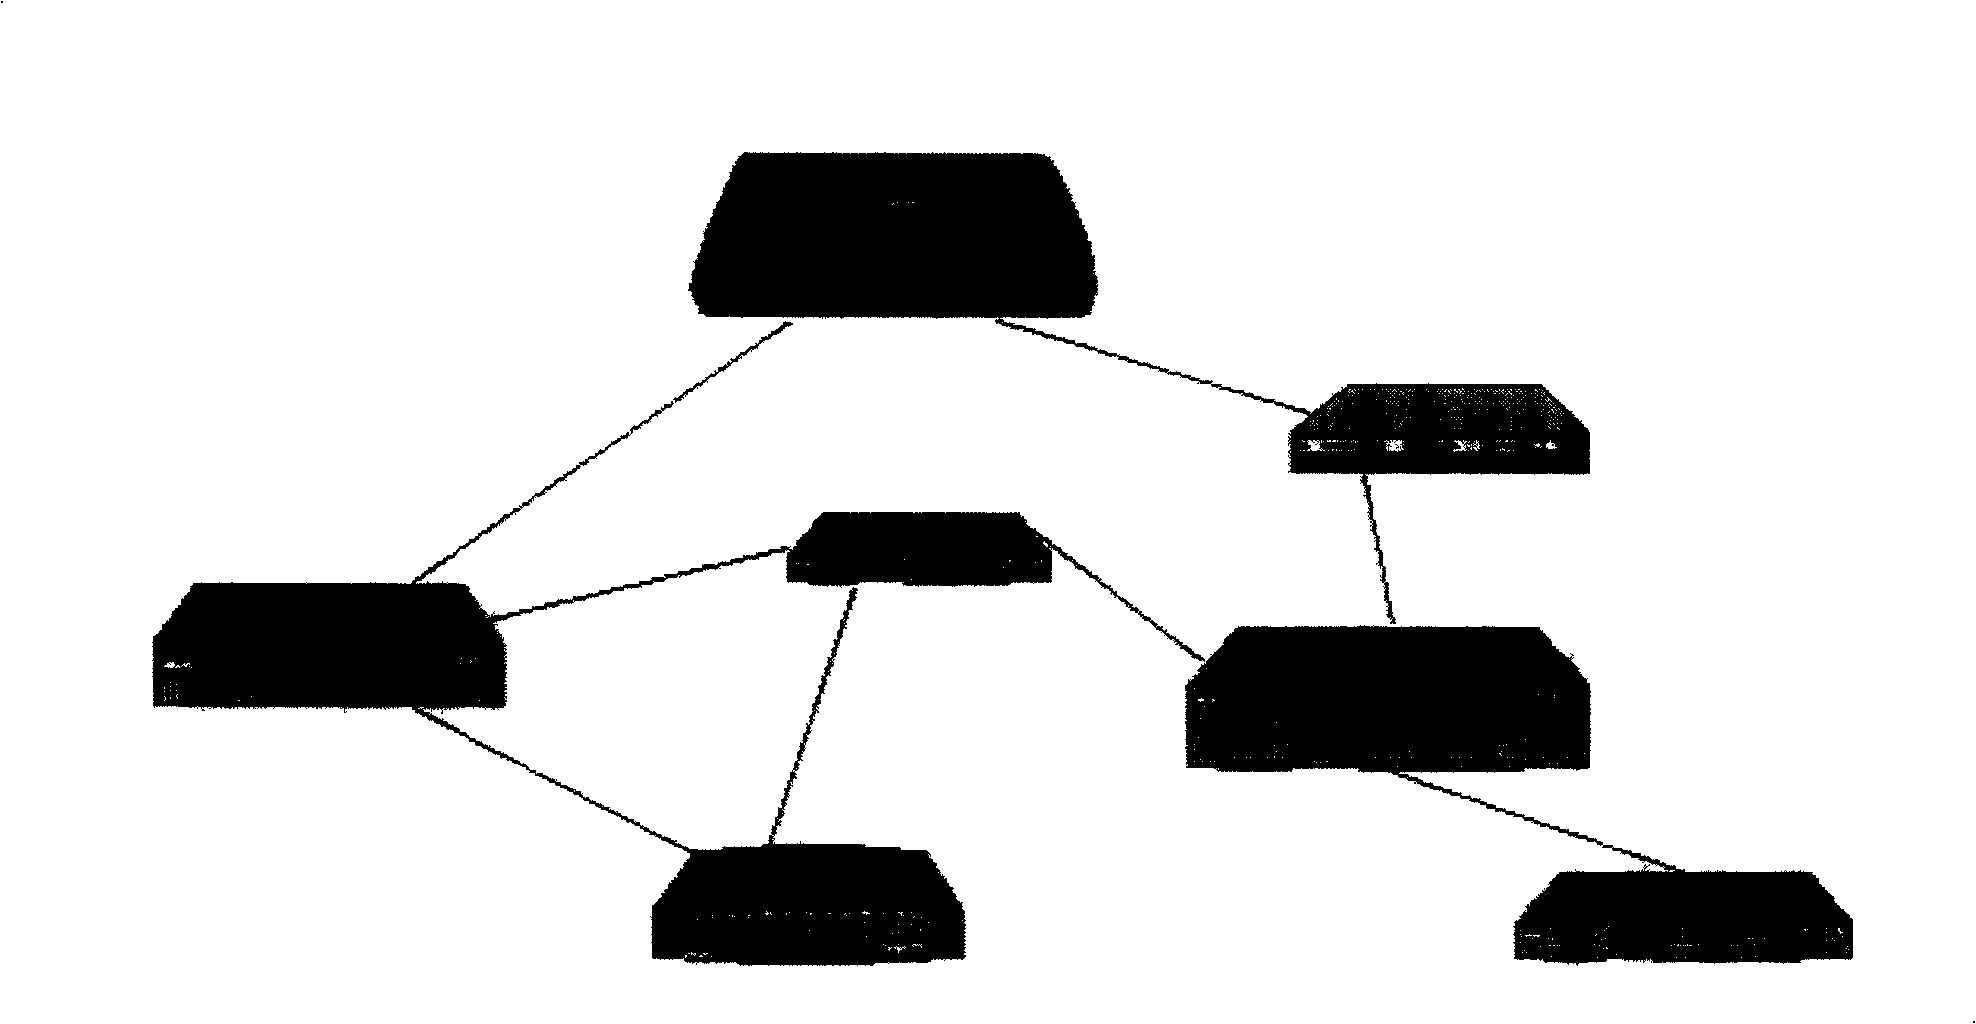 QoS connection admitting method based on ipv6